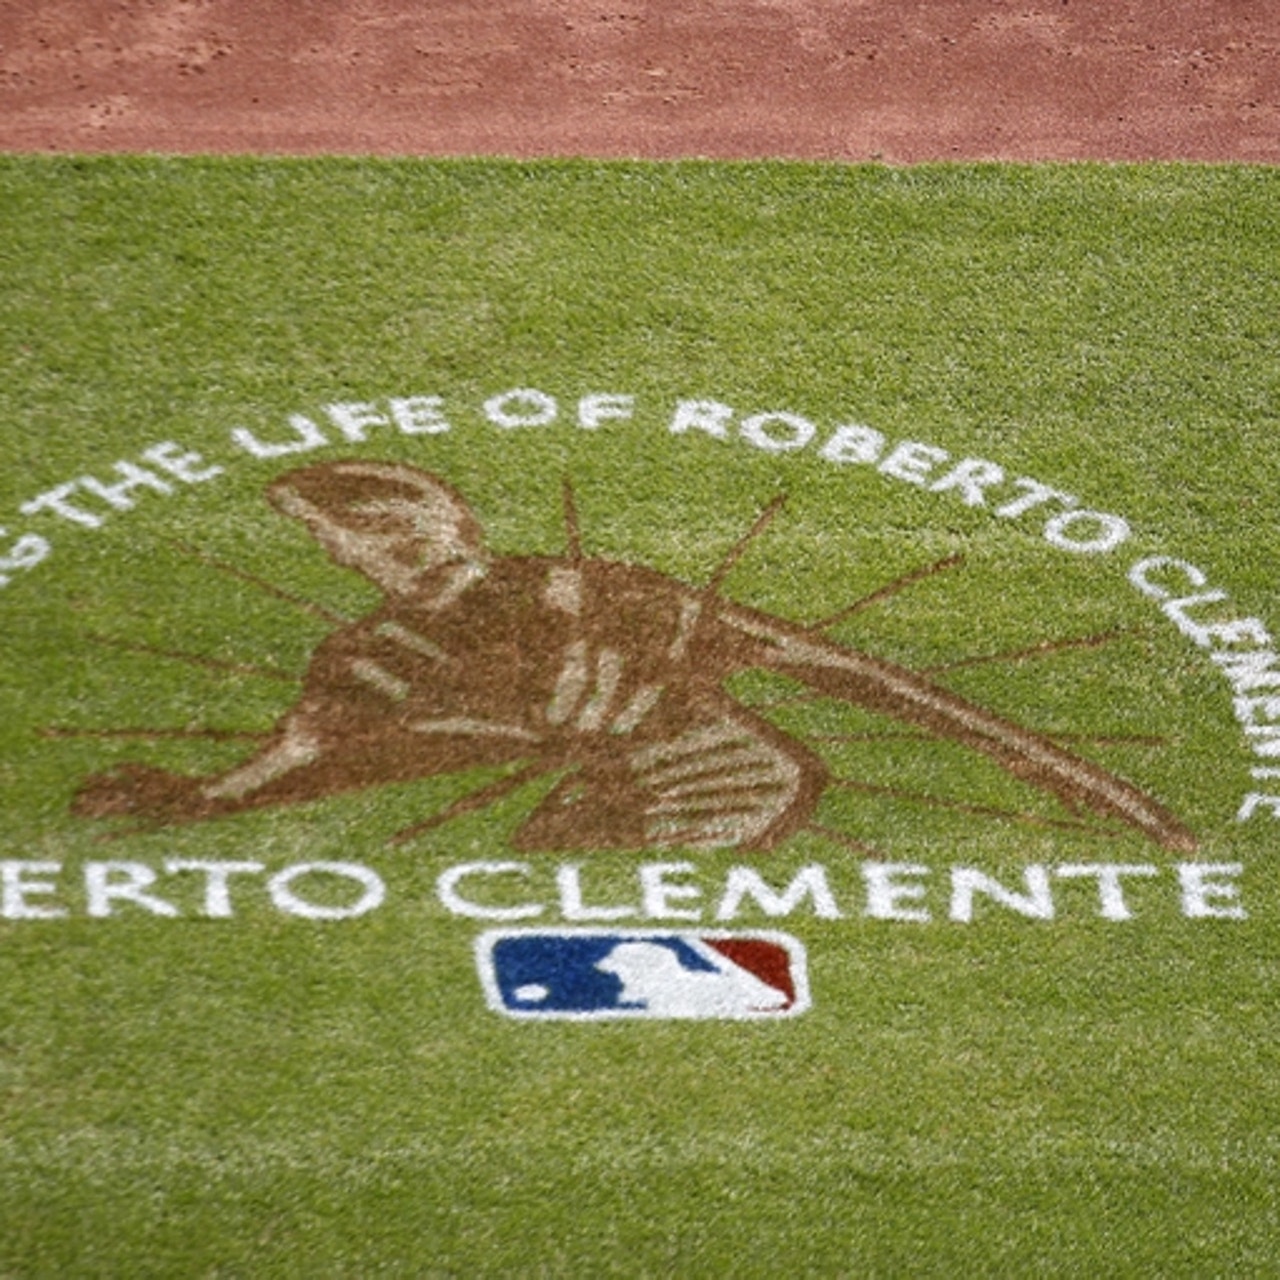 Pittsburgh Pirates History: Roberto Clemente Killed in Plane Crash